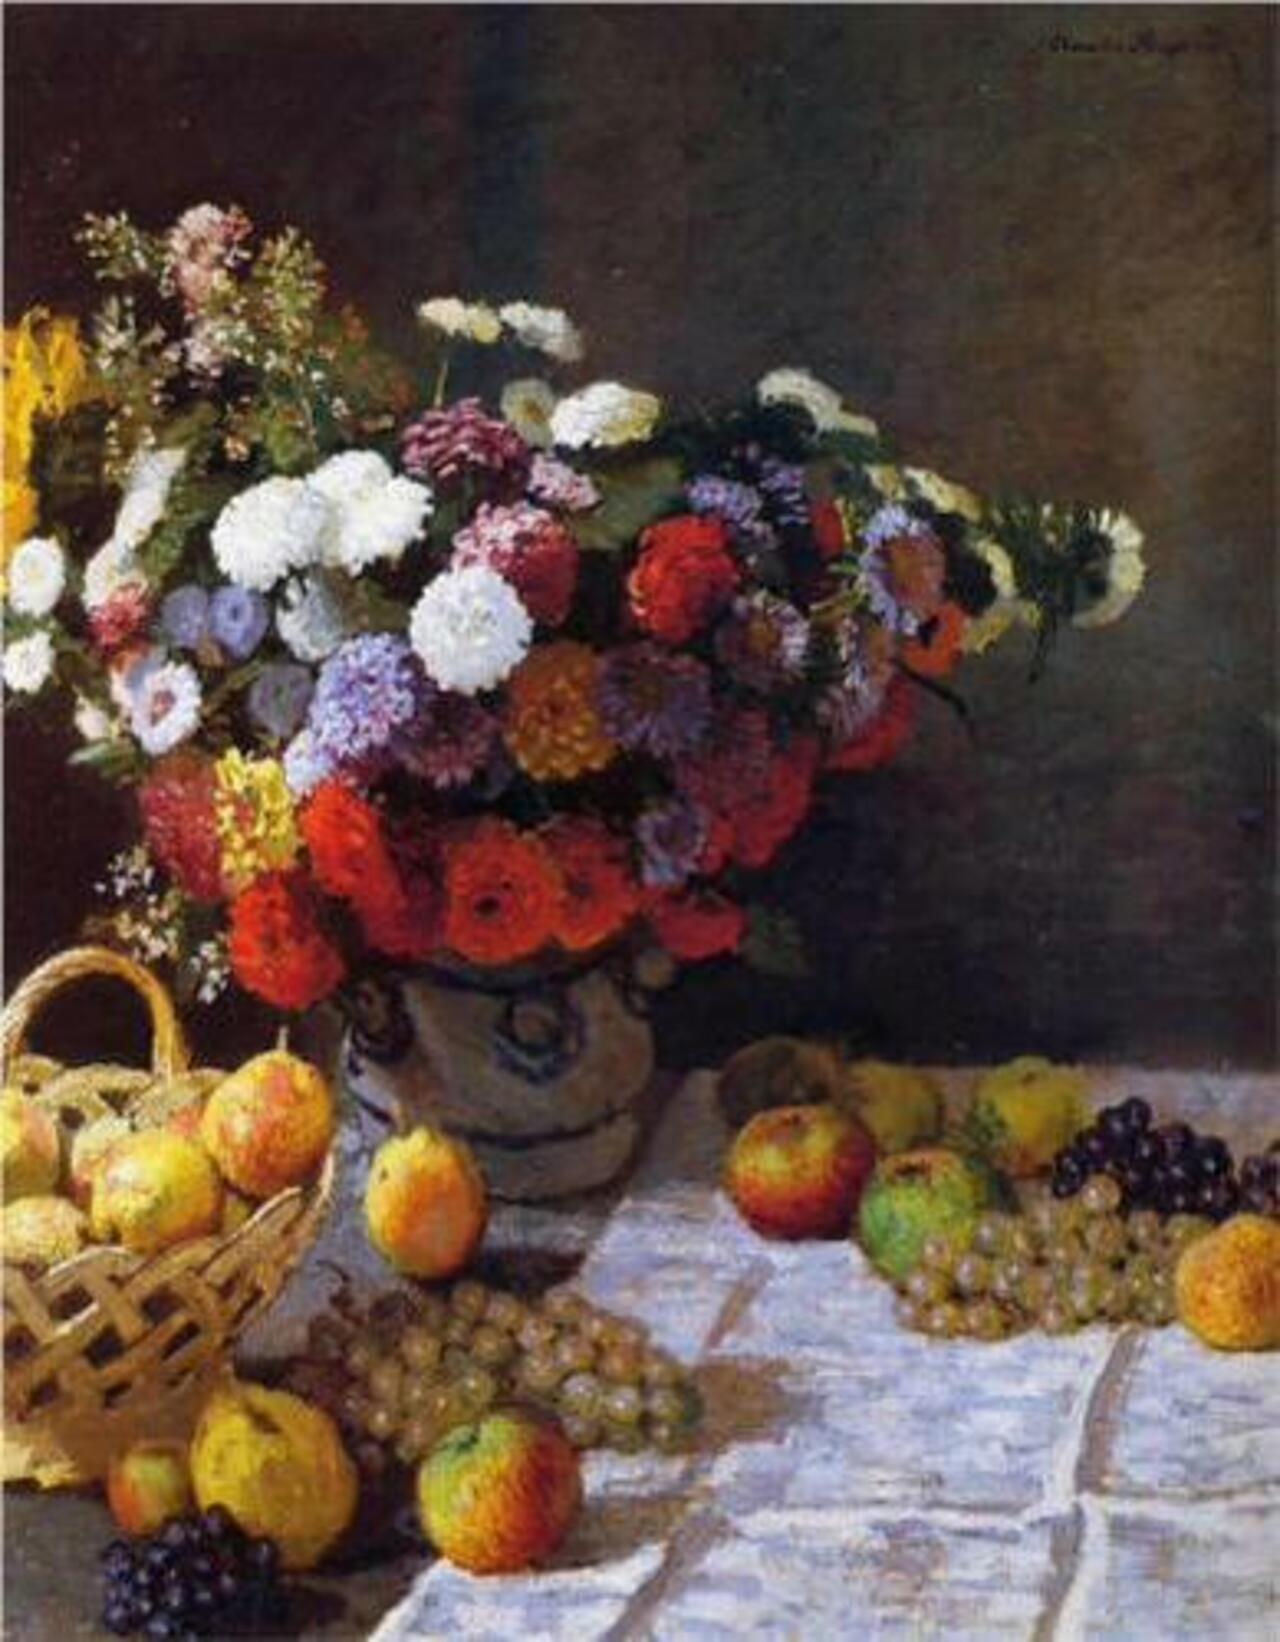 Claude #MONET, "FLOWERS AND FRUITS" 1869 #ilovemonet #art #artwit #twitart #iloveart #painting #artist #followart http://t.co/umKQCni2h9